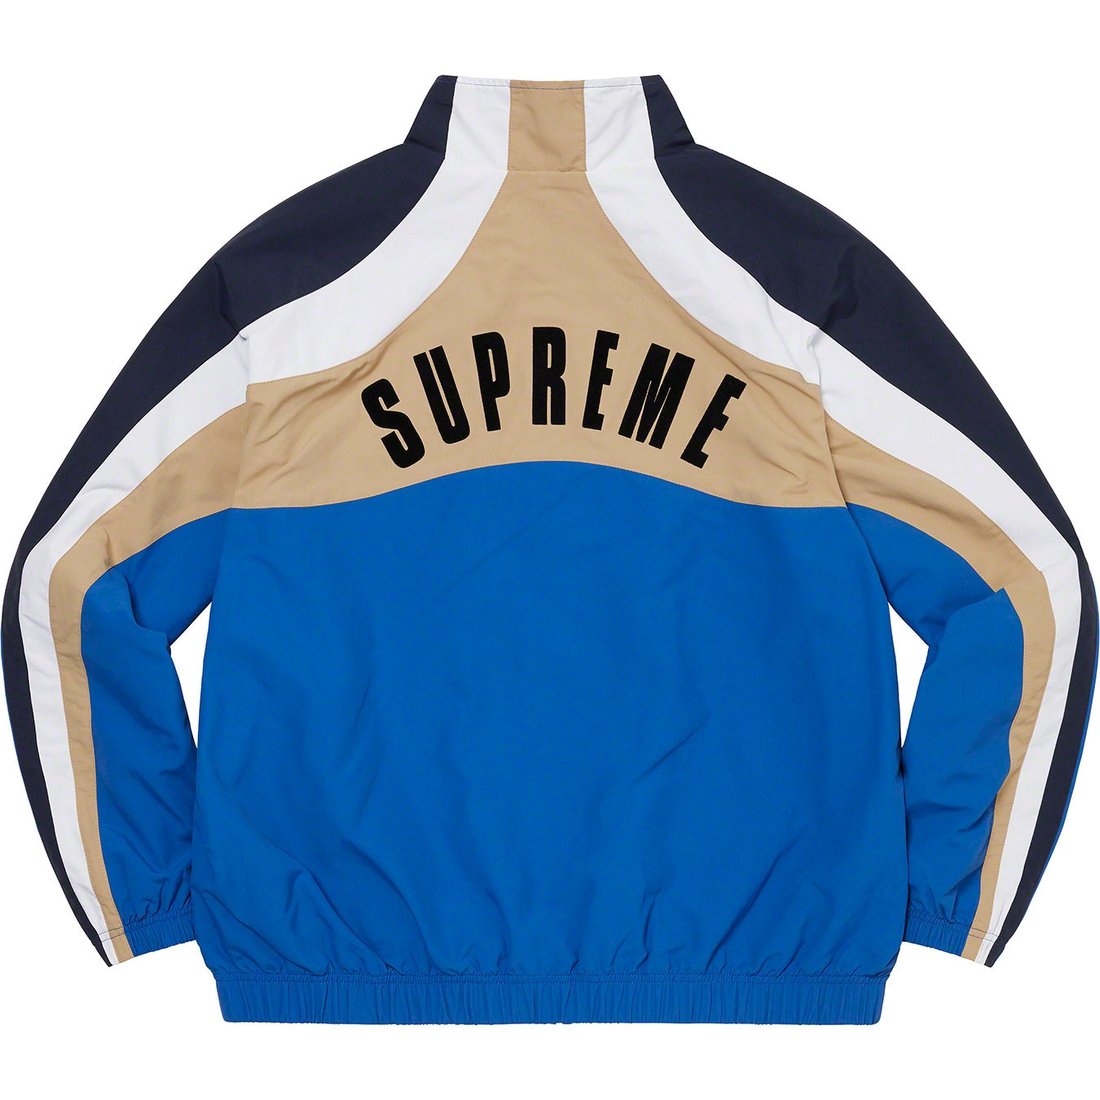 Details on Supreme Umbro Track Jacket Blue from spring summer 2023 (Price is $188)